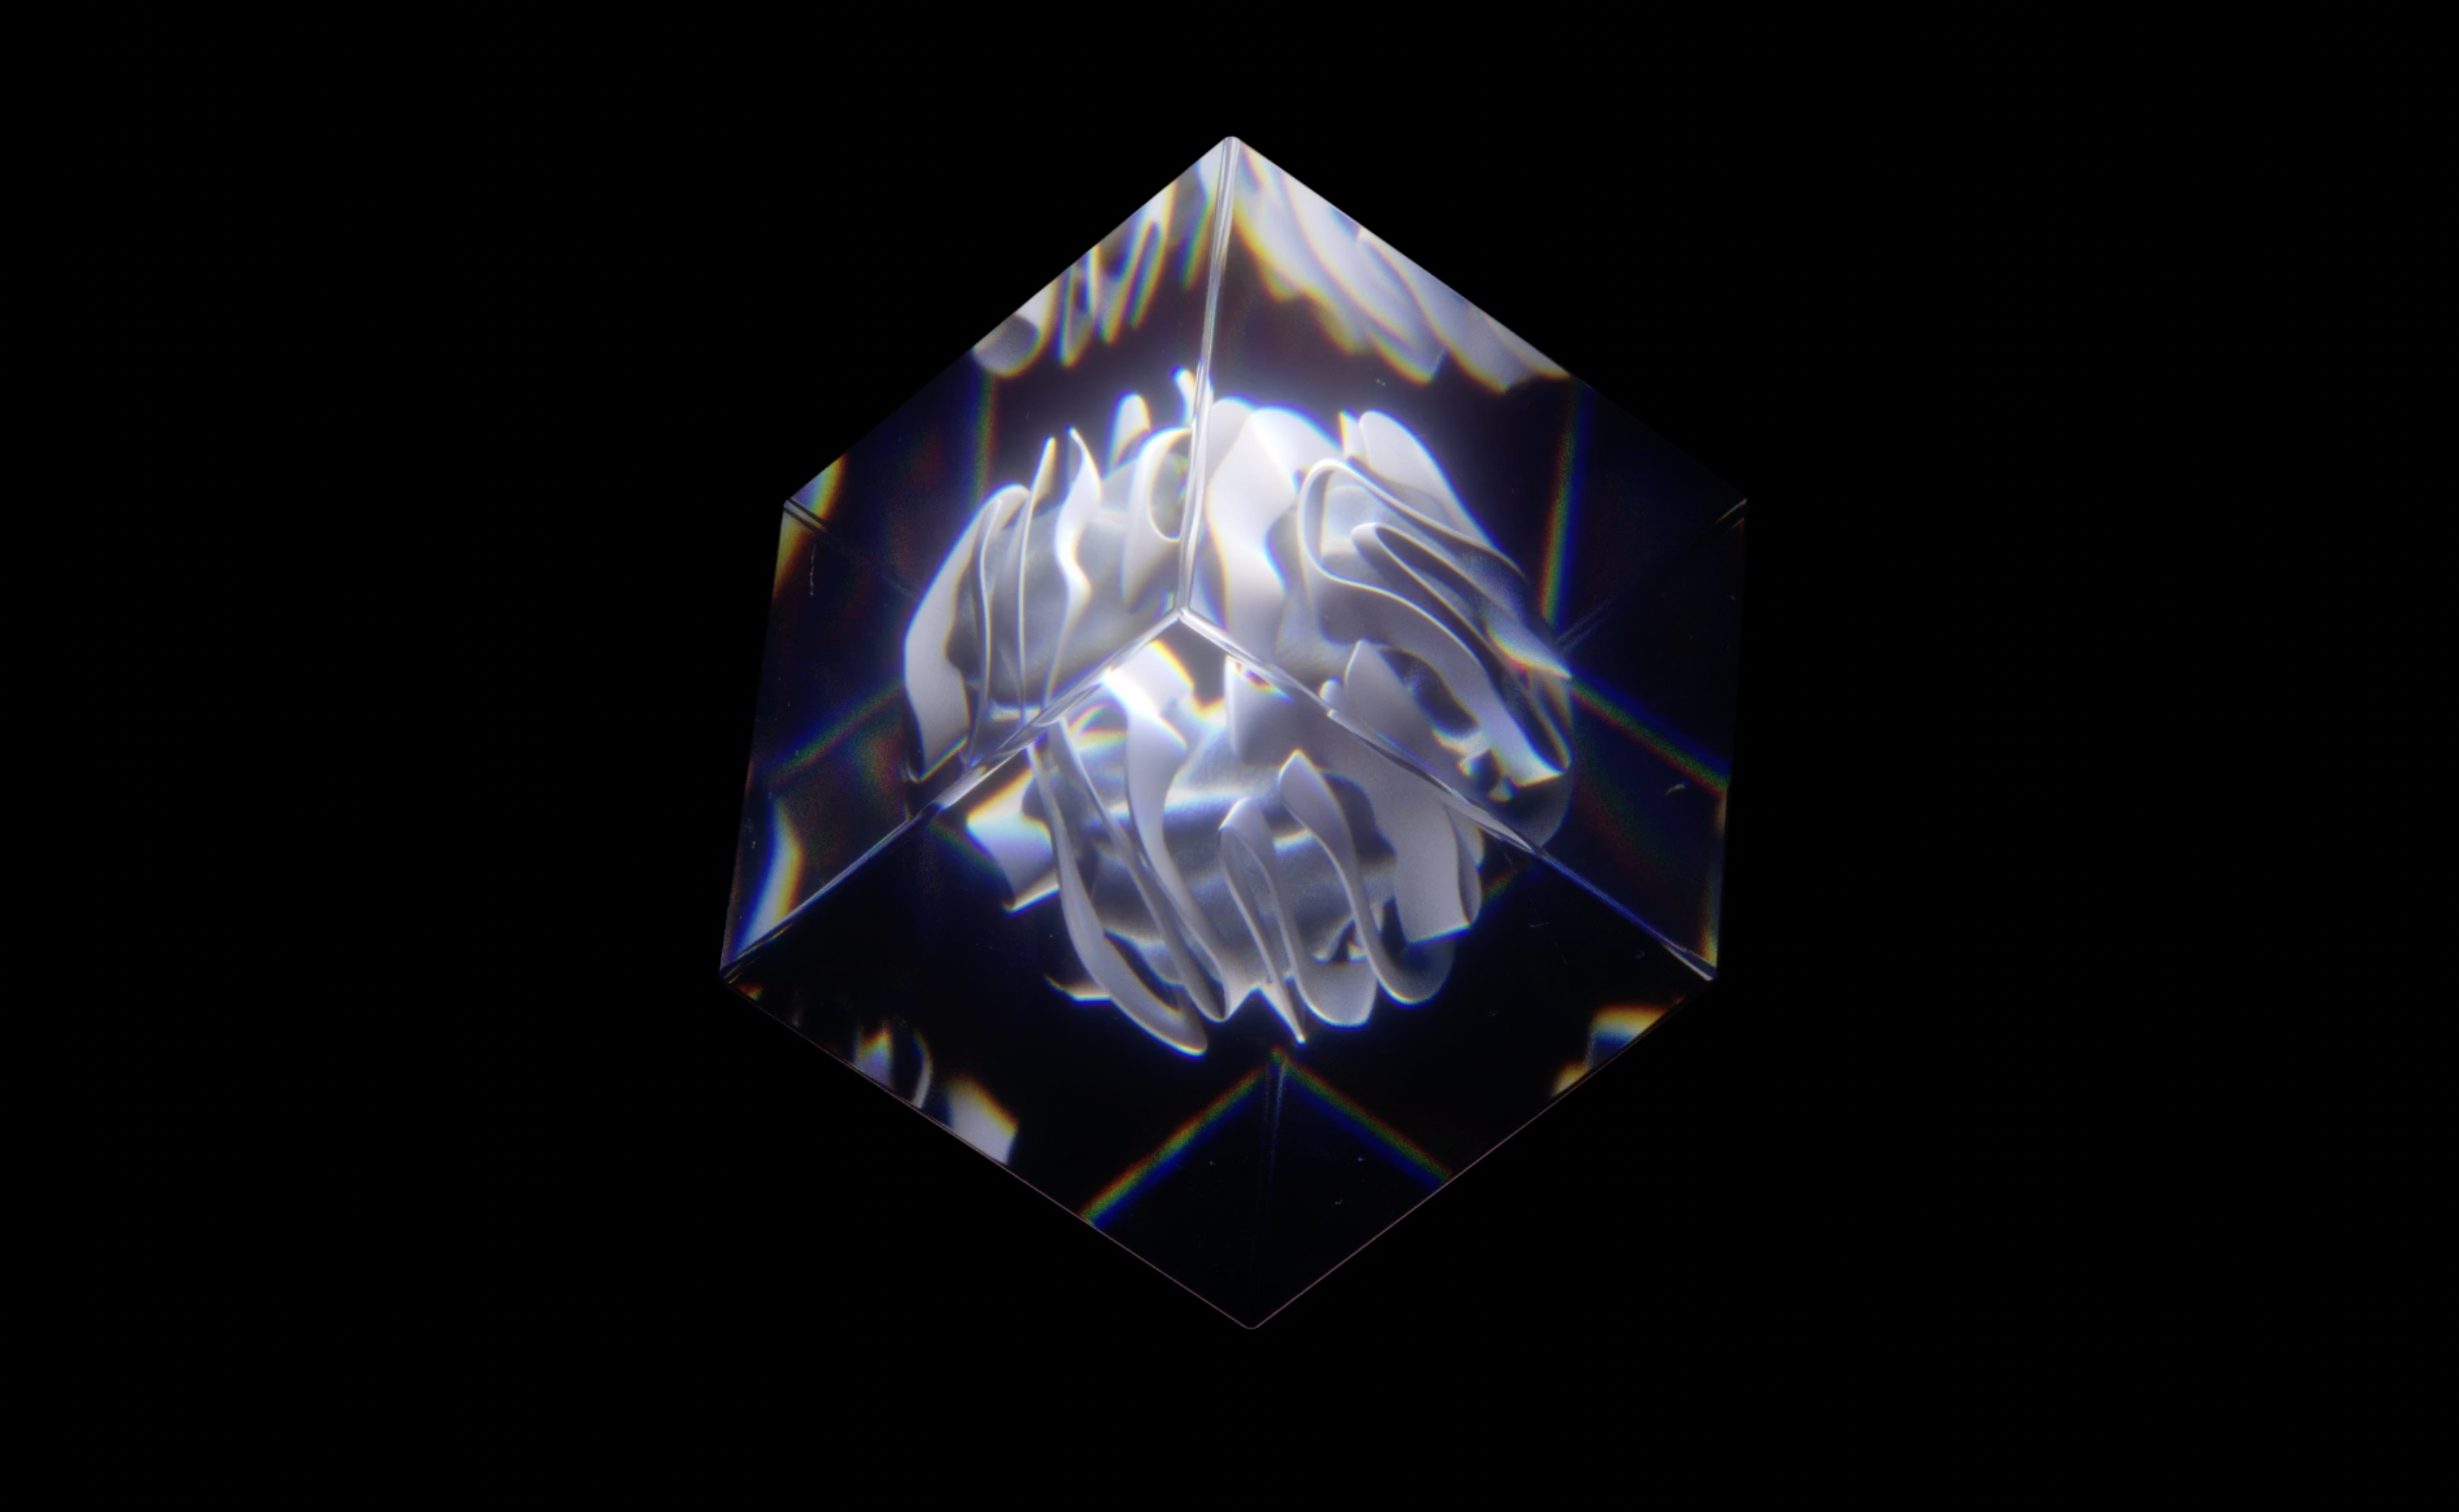 Transparent cube rotating with a brain like shape inside